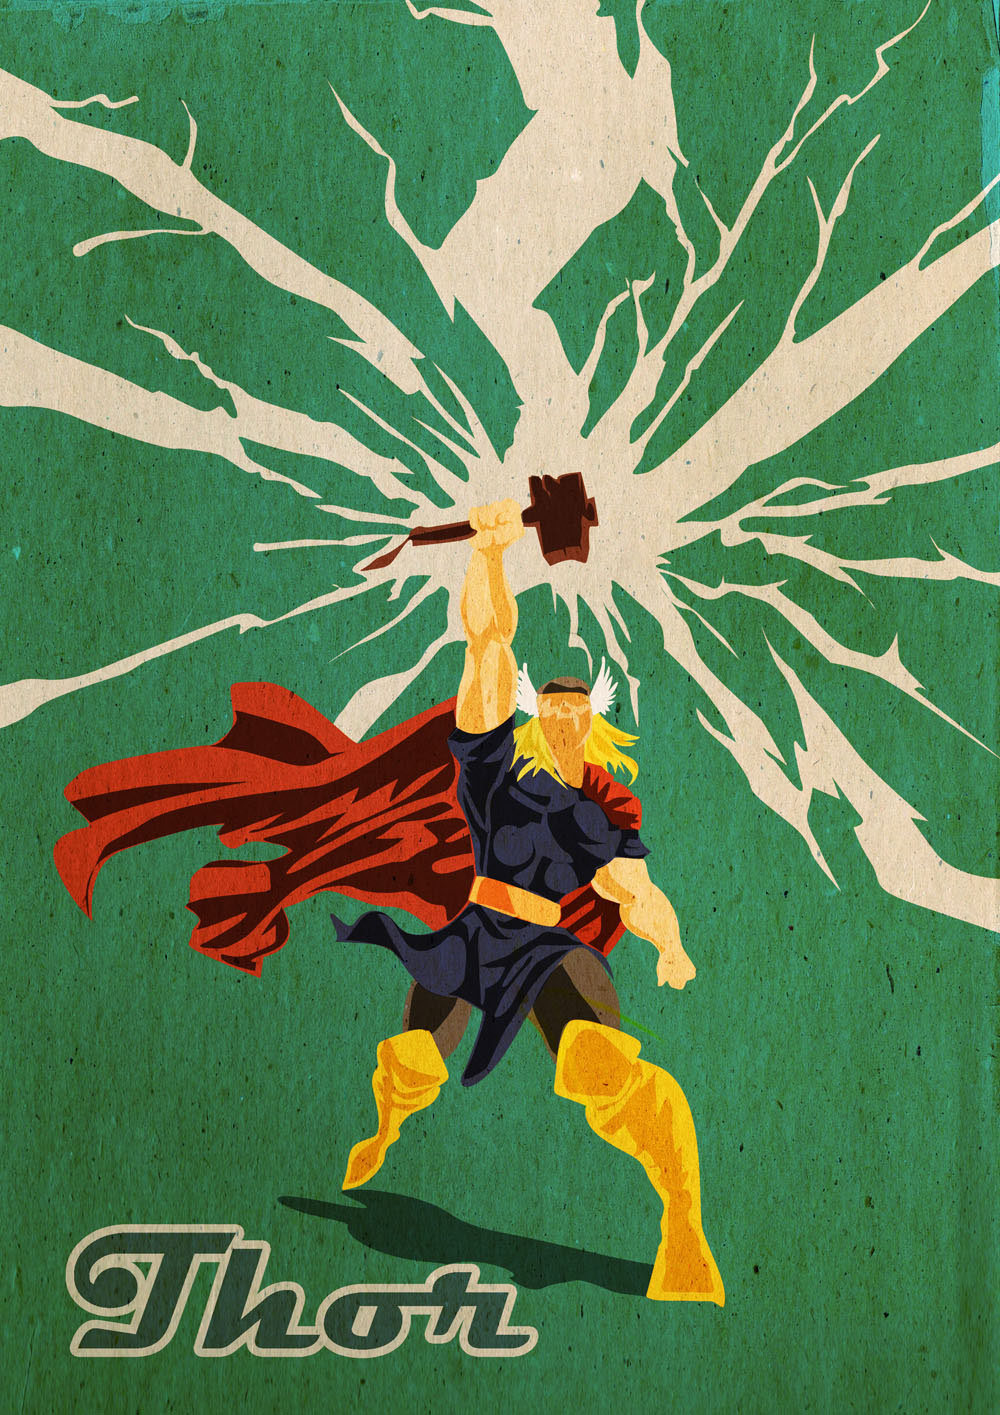 spidey cyclops Hulk Thor iron man magneto marvel comics marvel art vintage vintage illustration